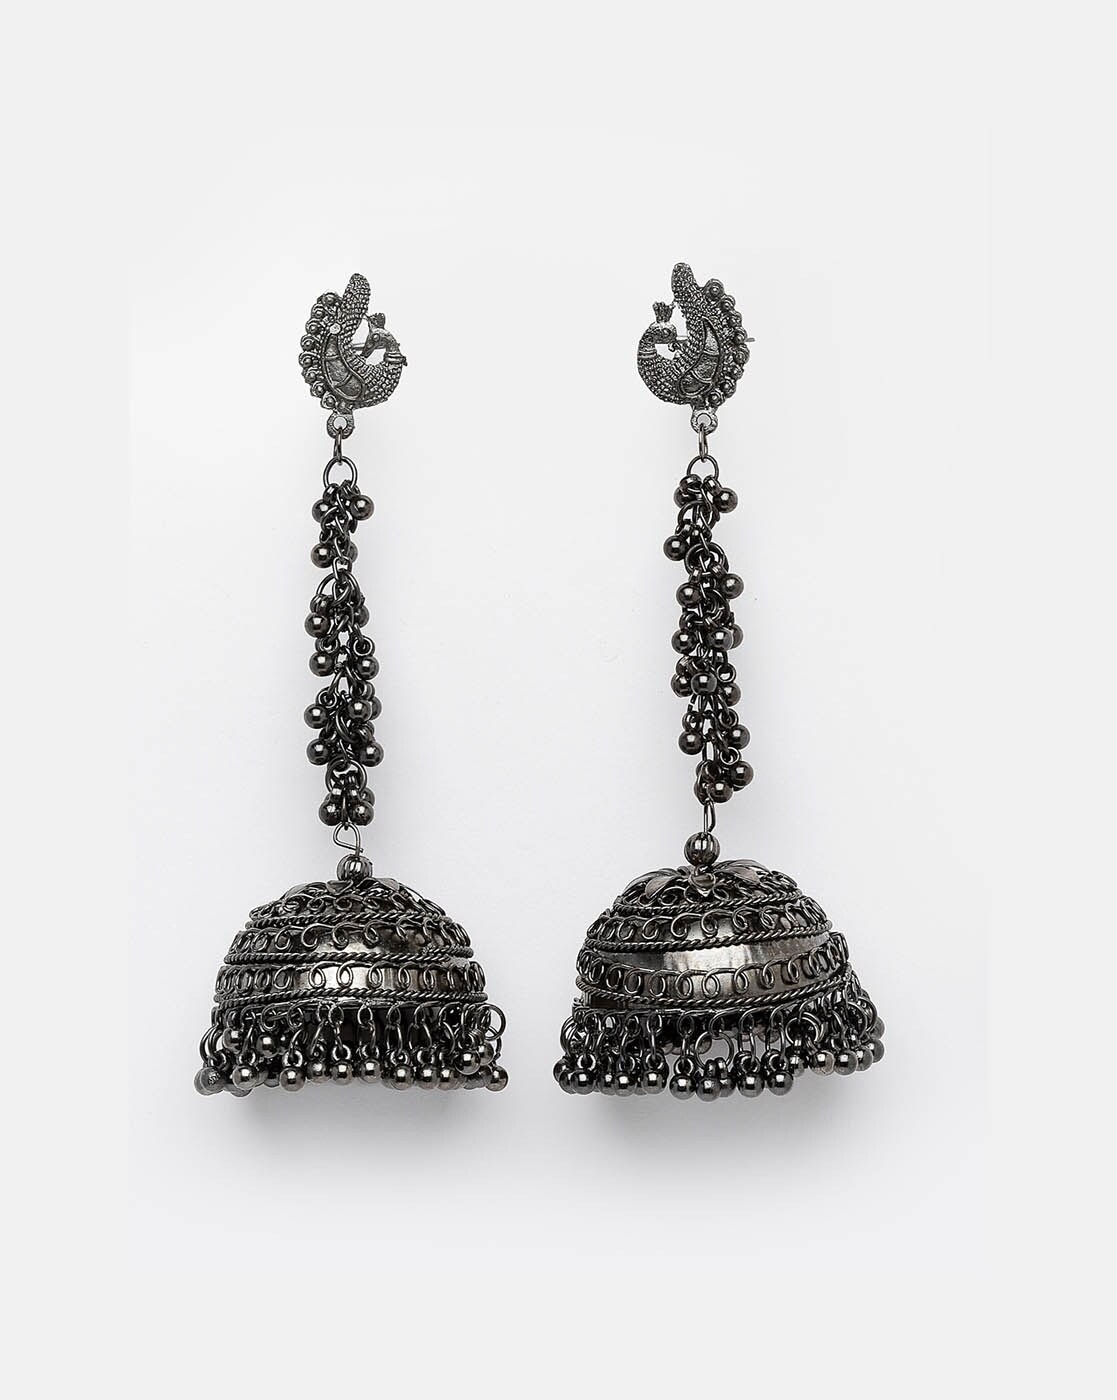 Black Metal Earring Bollywood Earring Oxidised Indian Jewelry Indian Earring  Bahubali Earring Oxidized Earring - Etsy | Black metal jewelry, Etsy  earrings, Indian jewelry earrings